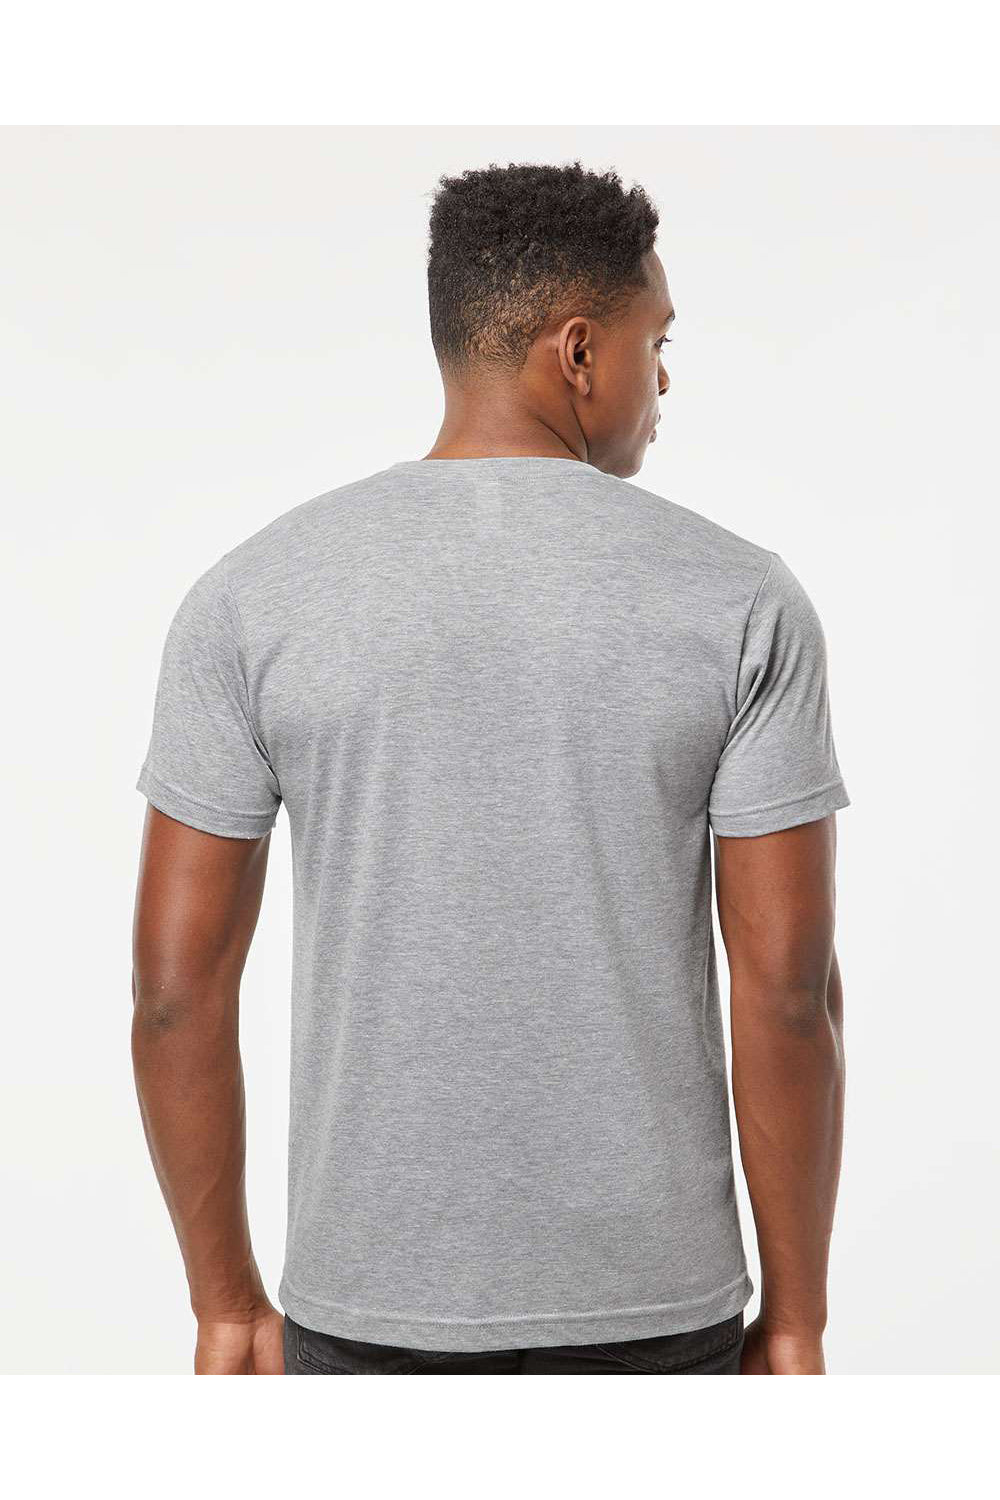 Tultex 207 Mens Poly-Rich Short Sleeve V-Neck T-Shirt Heather Grey Model Back